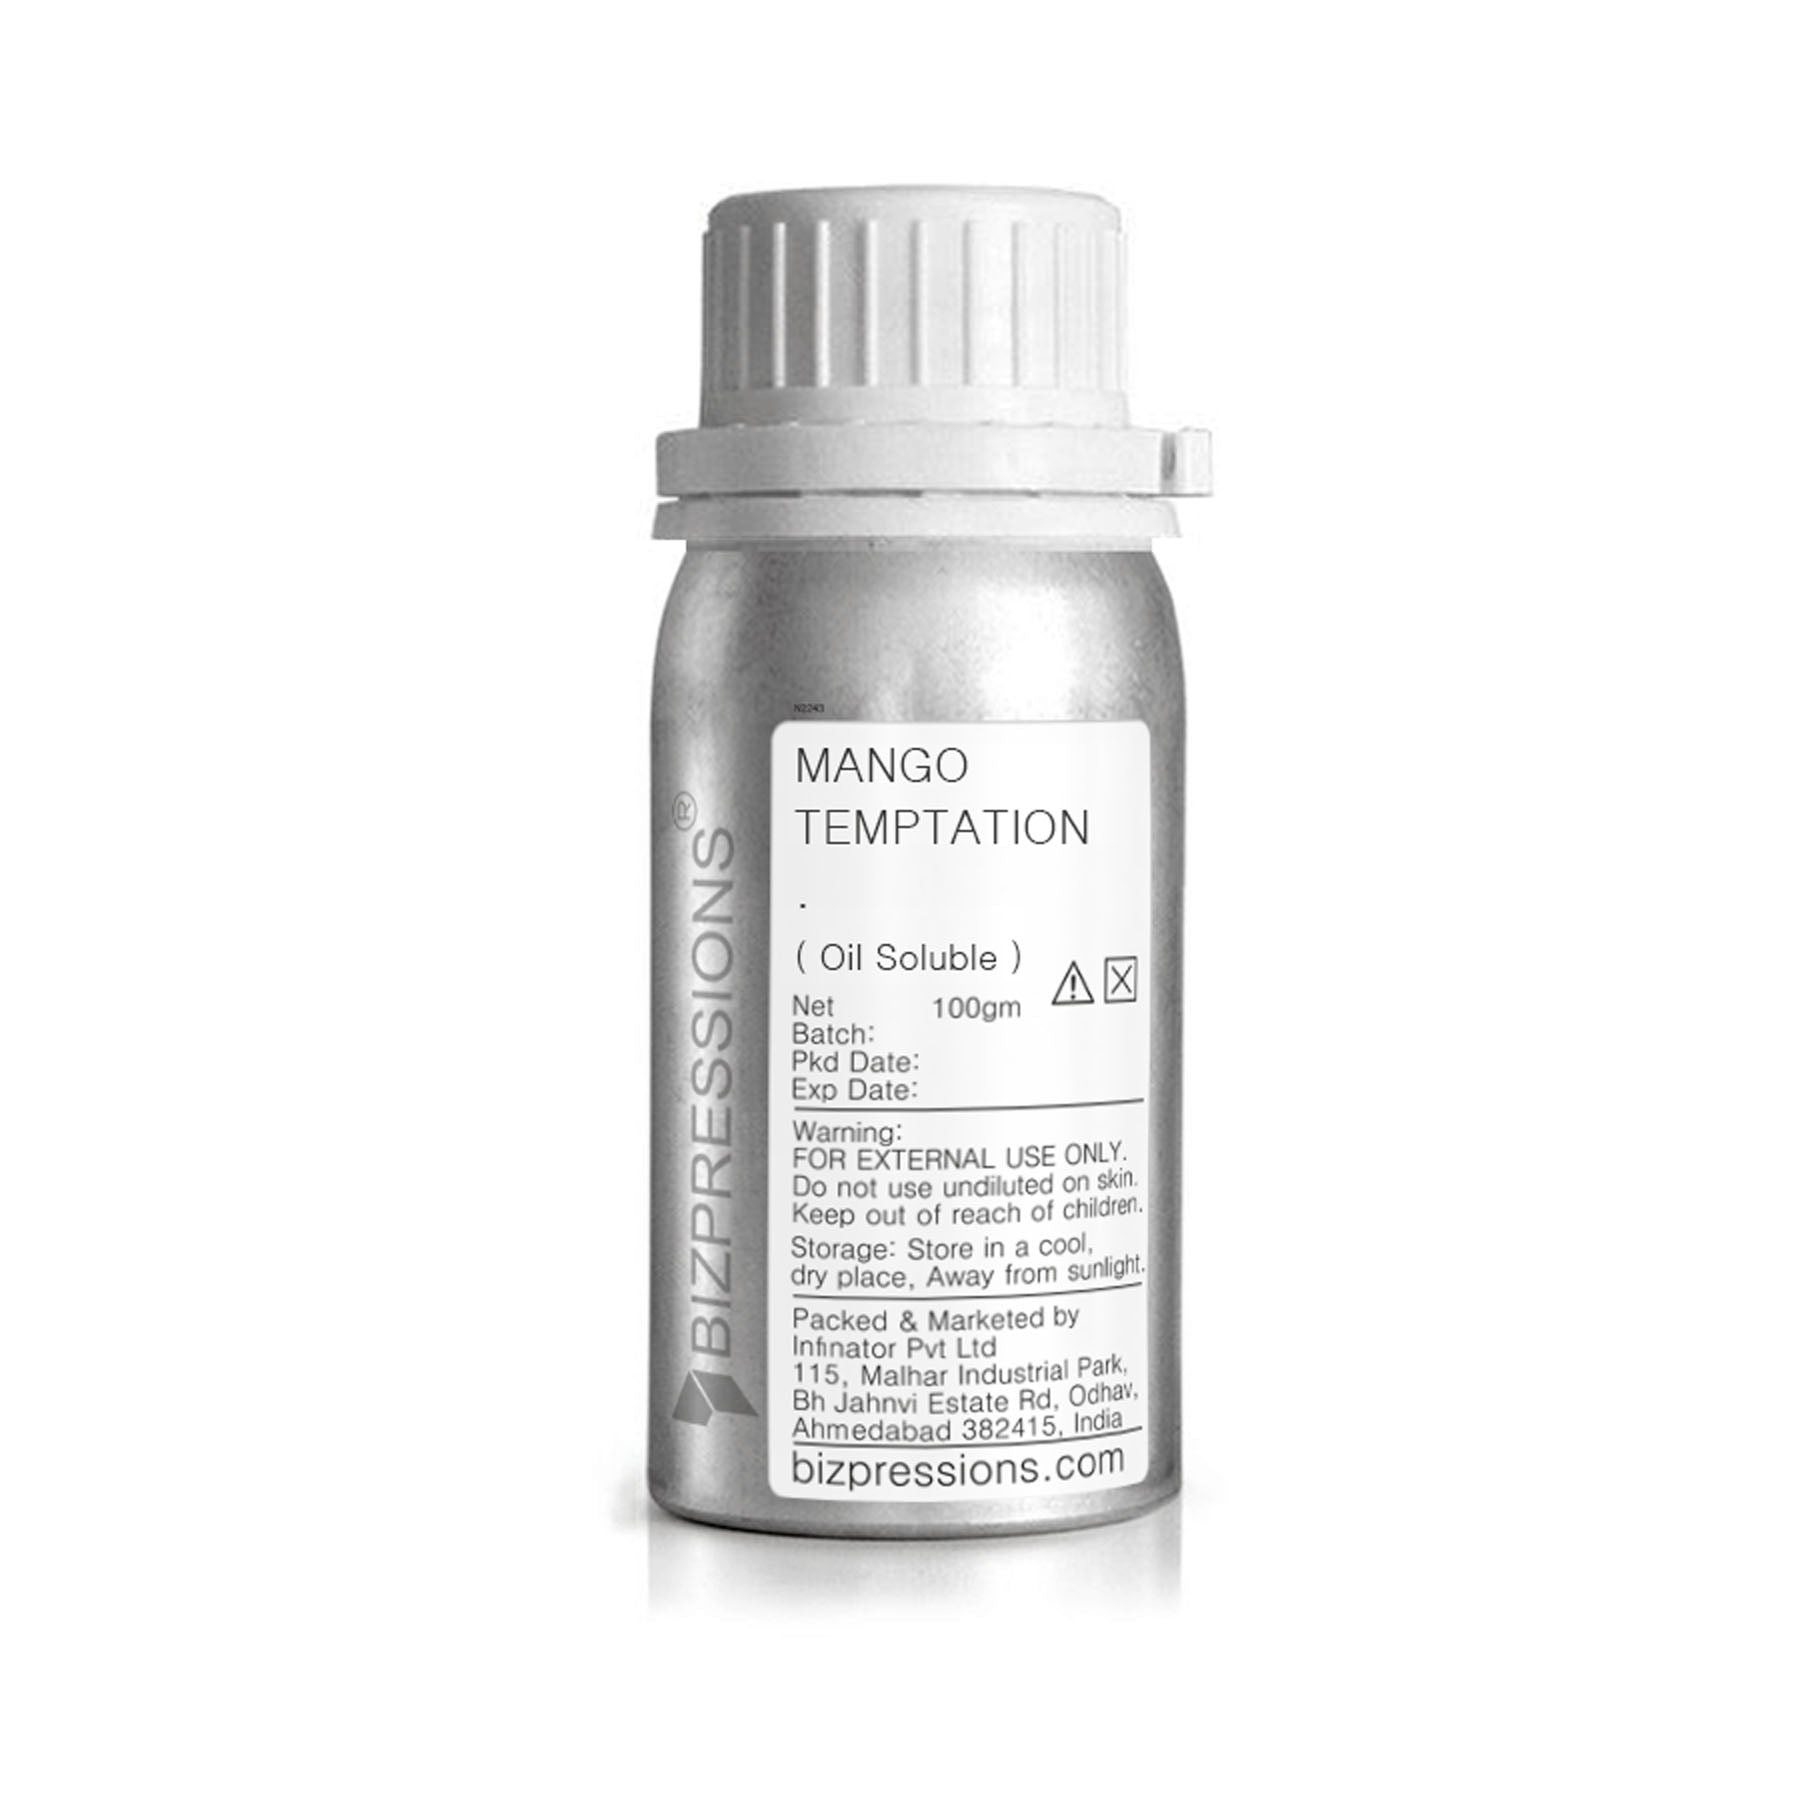 MANGO TEMPTATION - Fragrance ( Oil Soluble ) - 100 gm